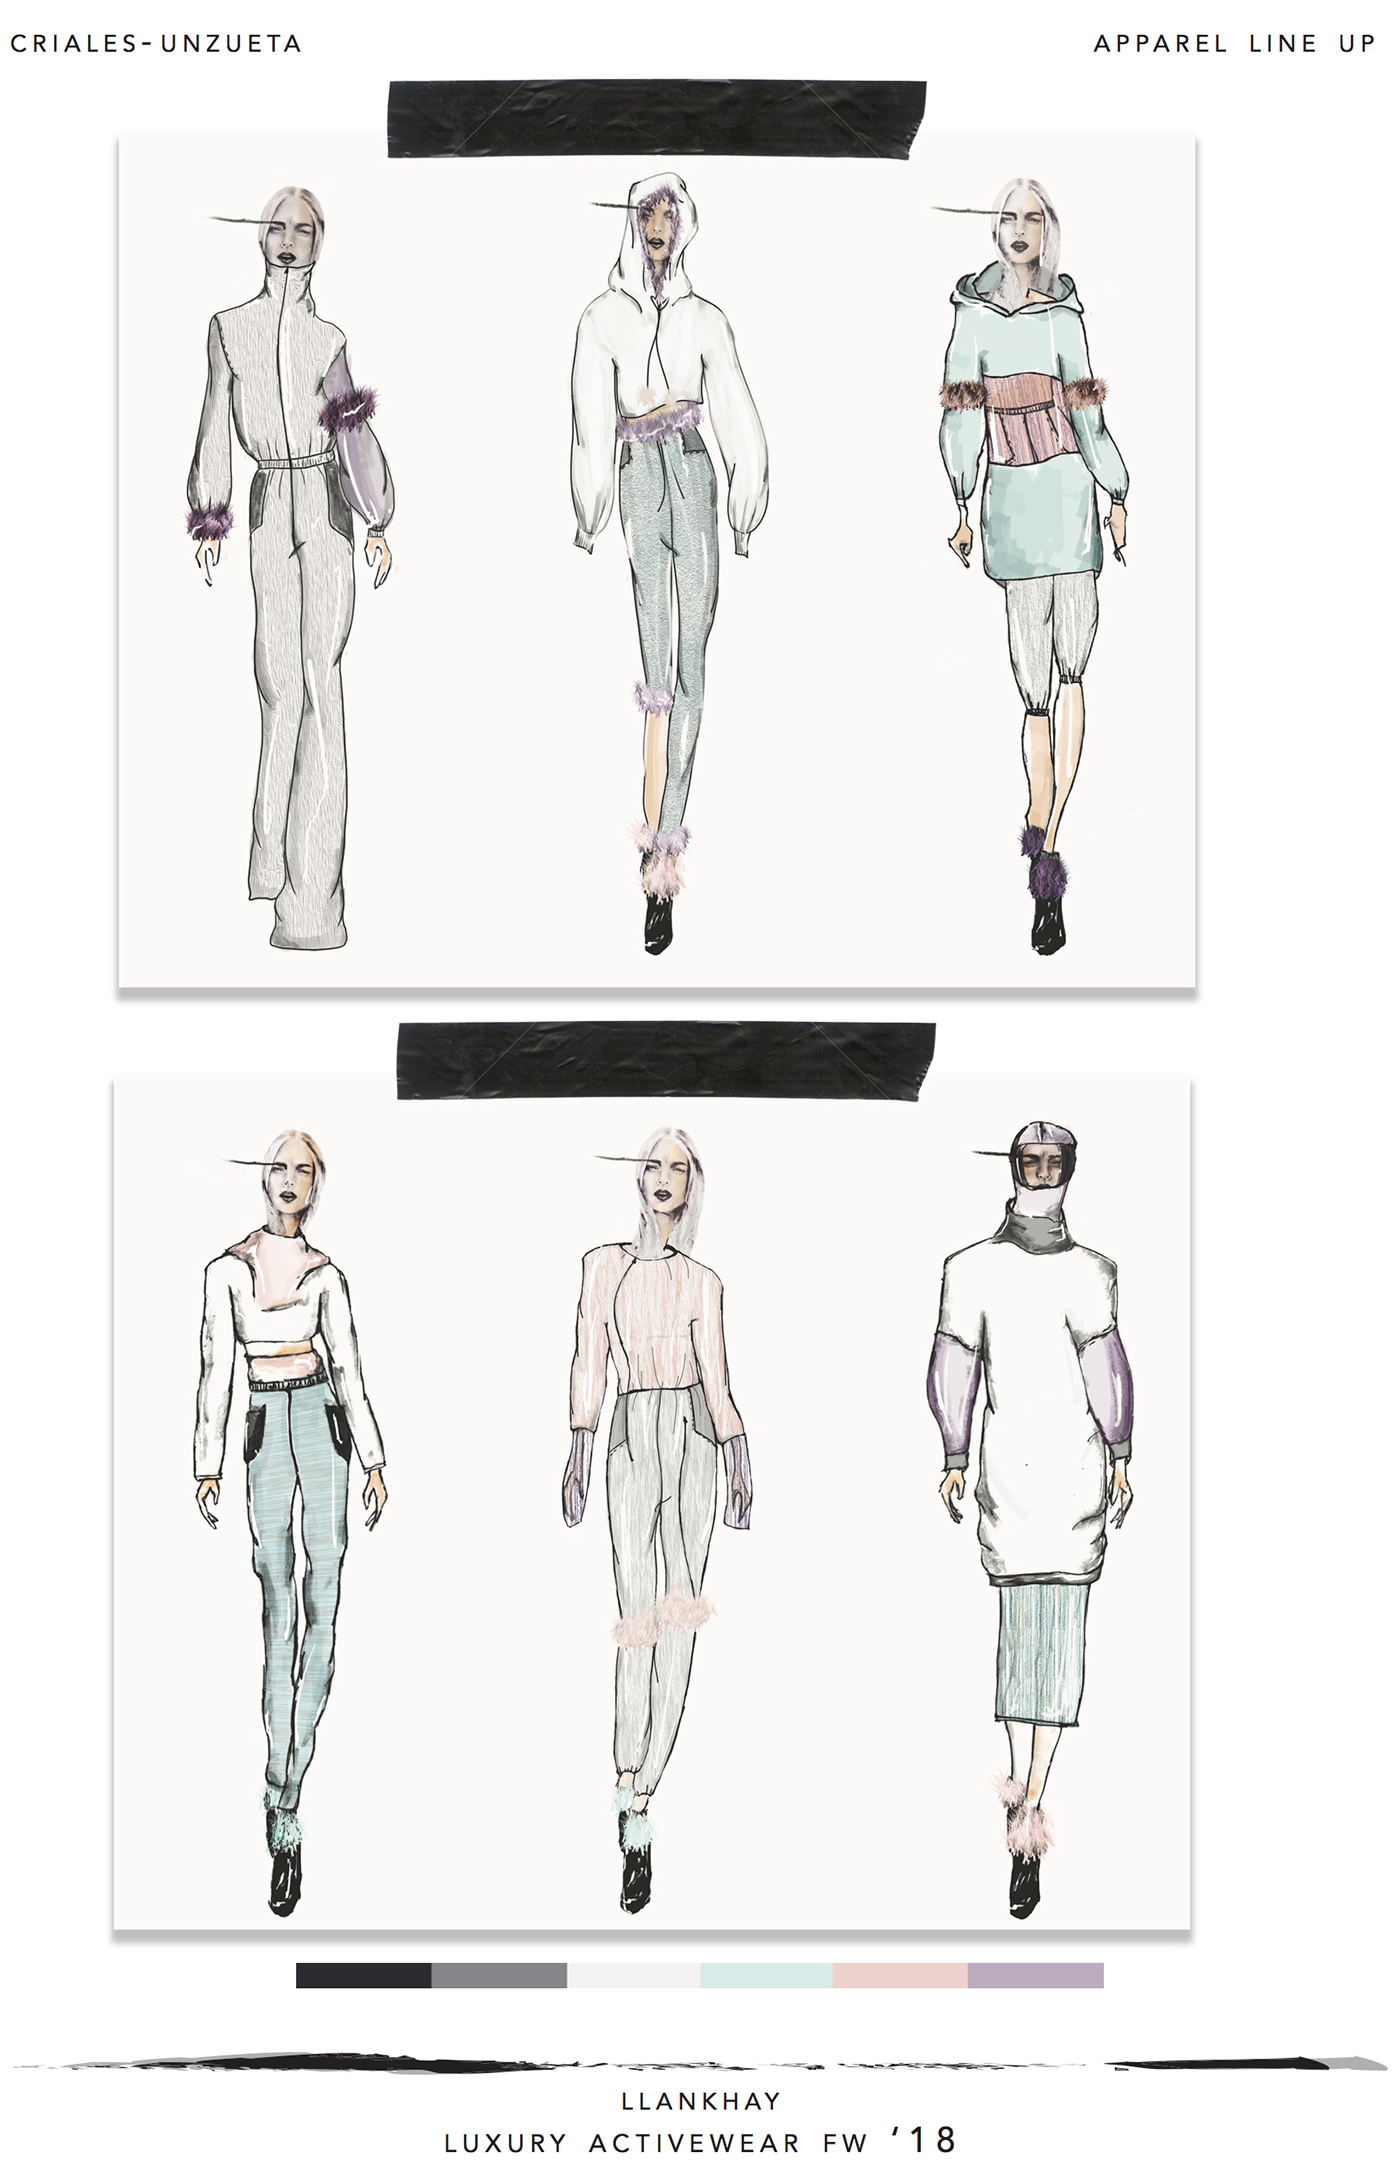 activewear luxury cad DigitalIllustration fashionillustration moodboard Fur apparel accessories leather